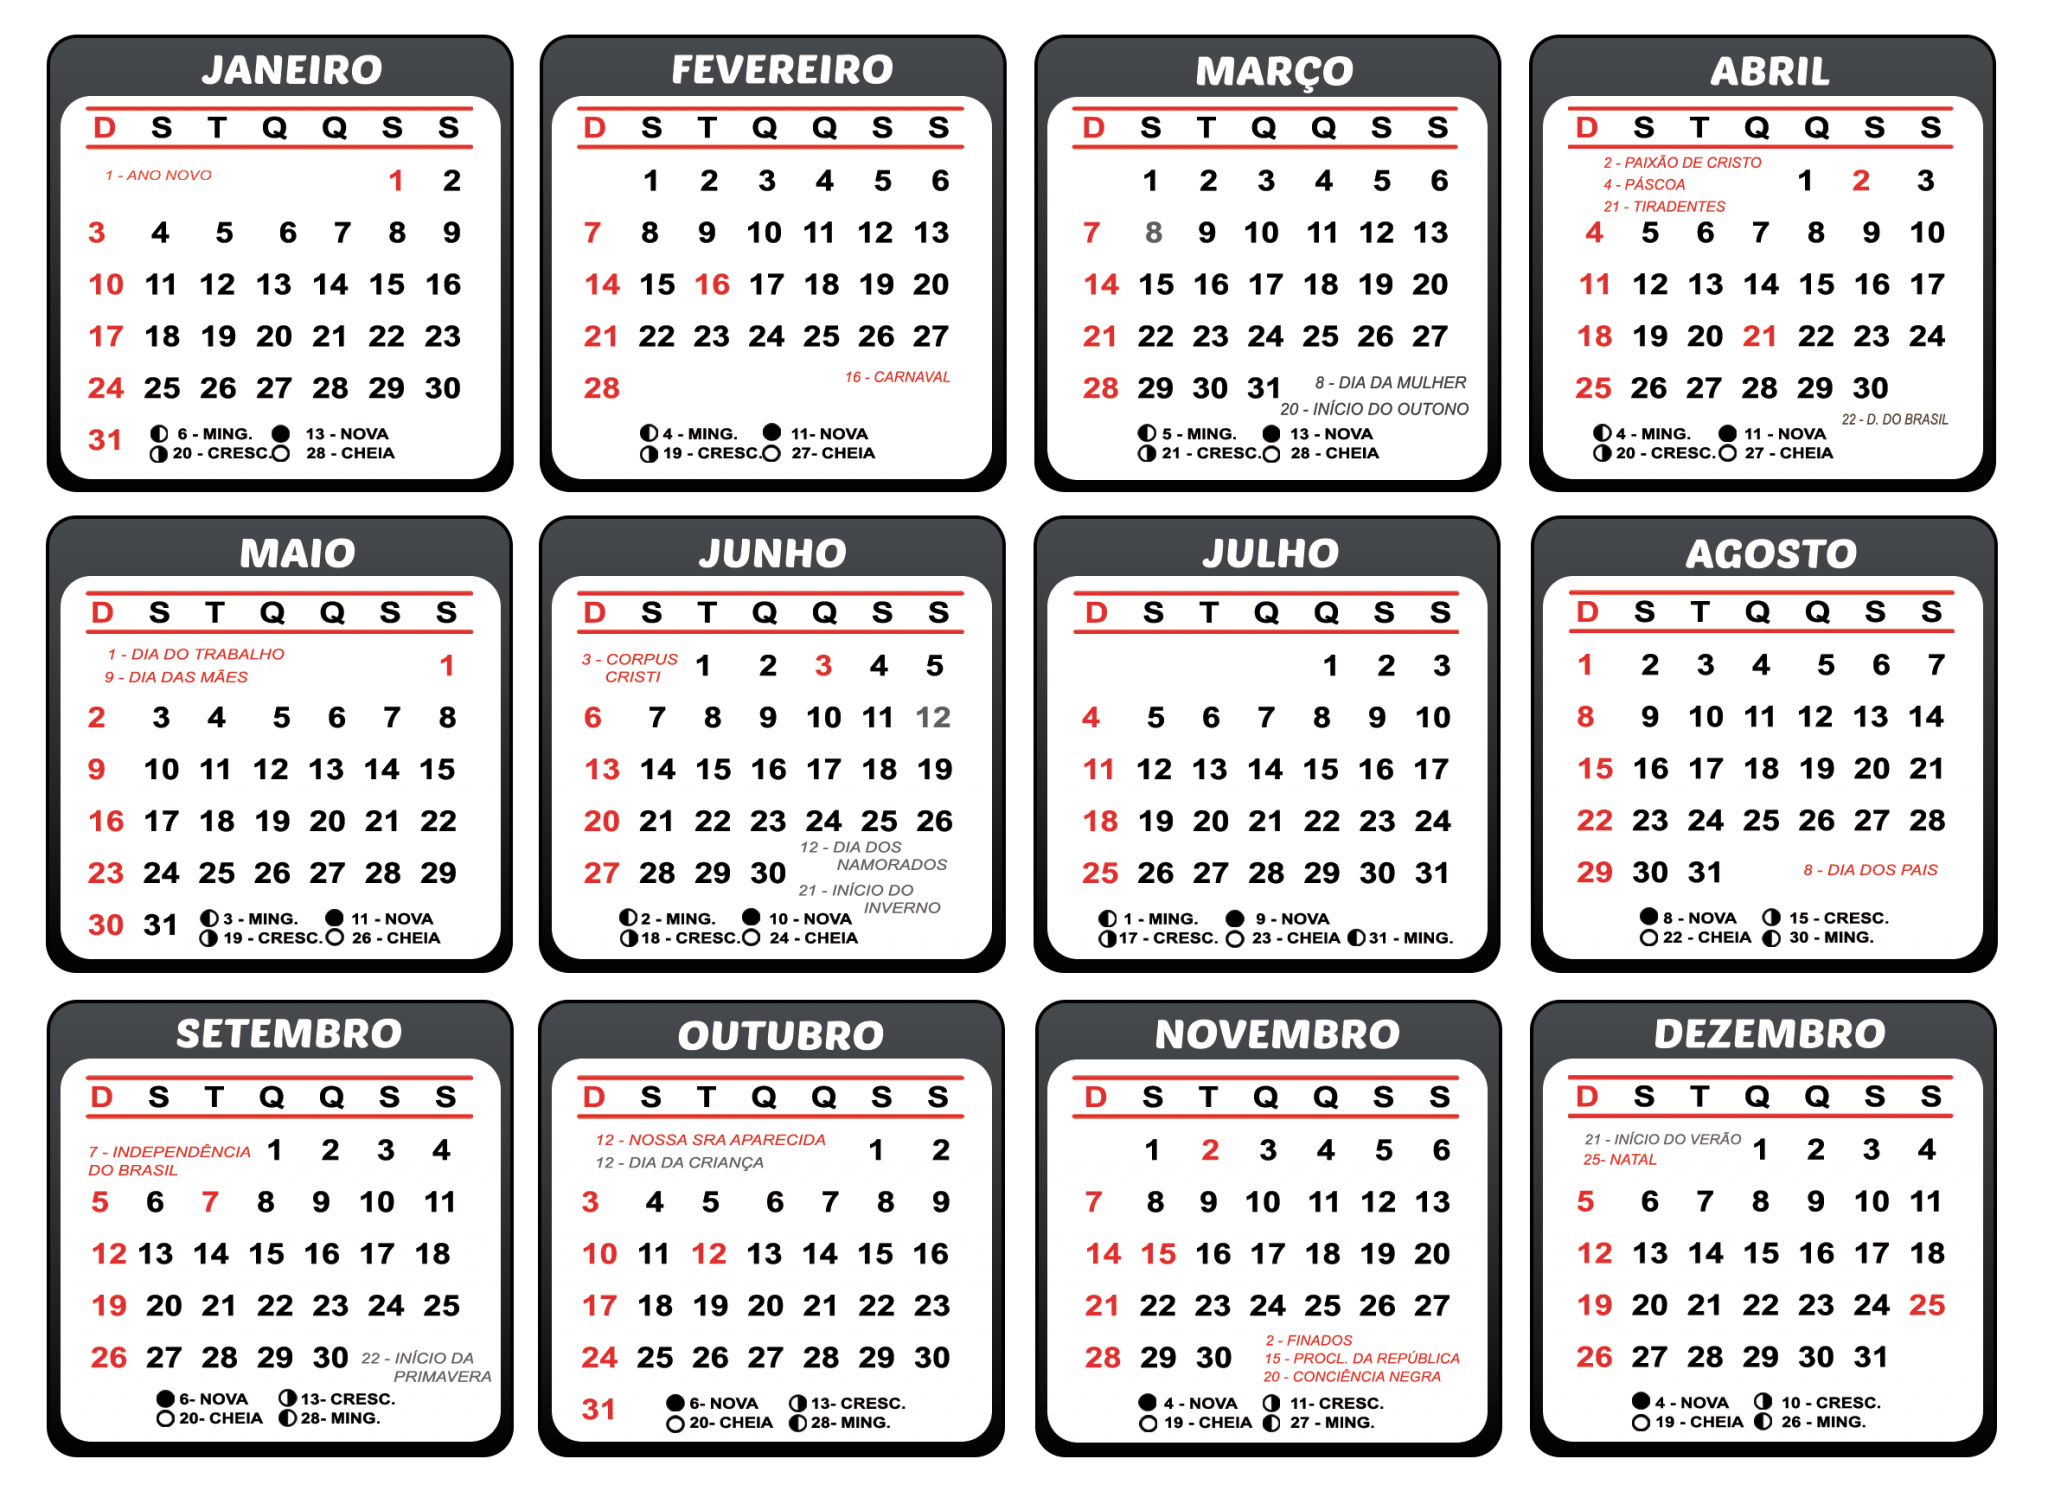 Calendario Juliano 2021 Para Imprimir